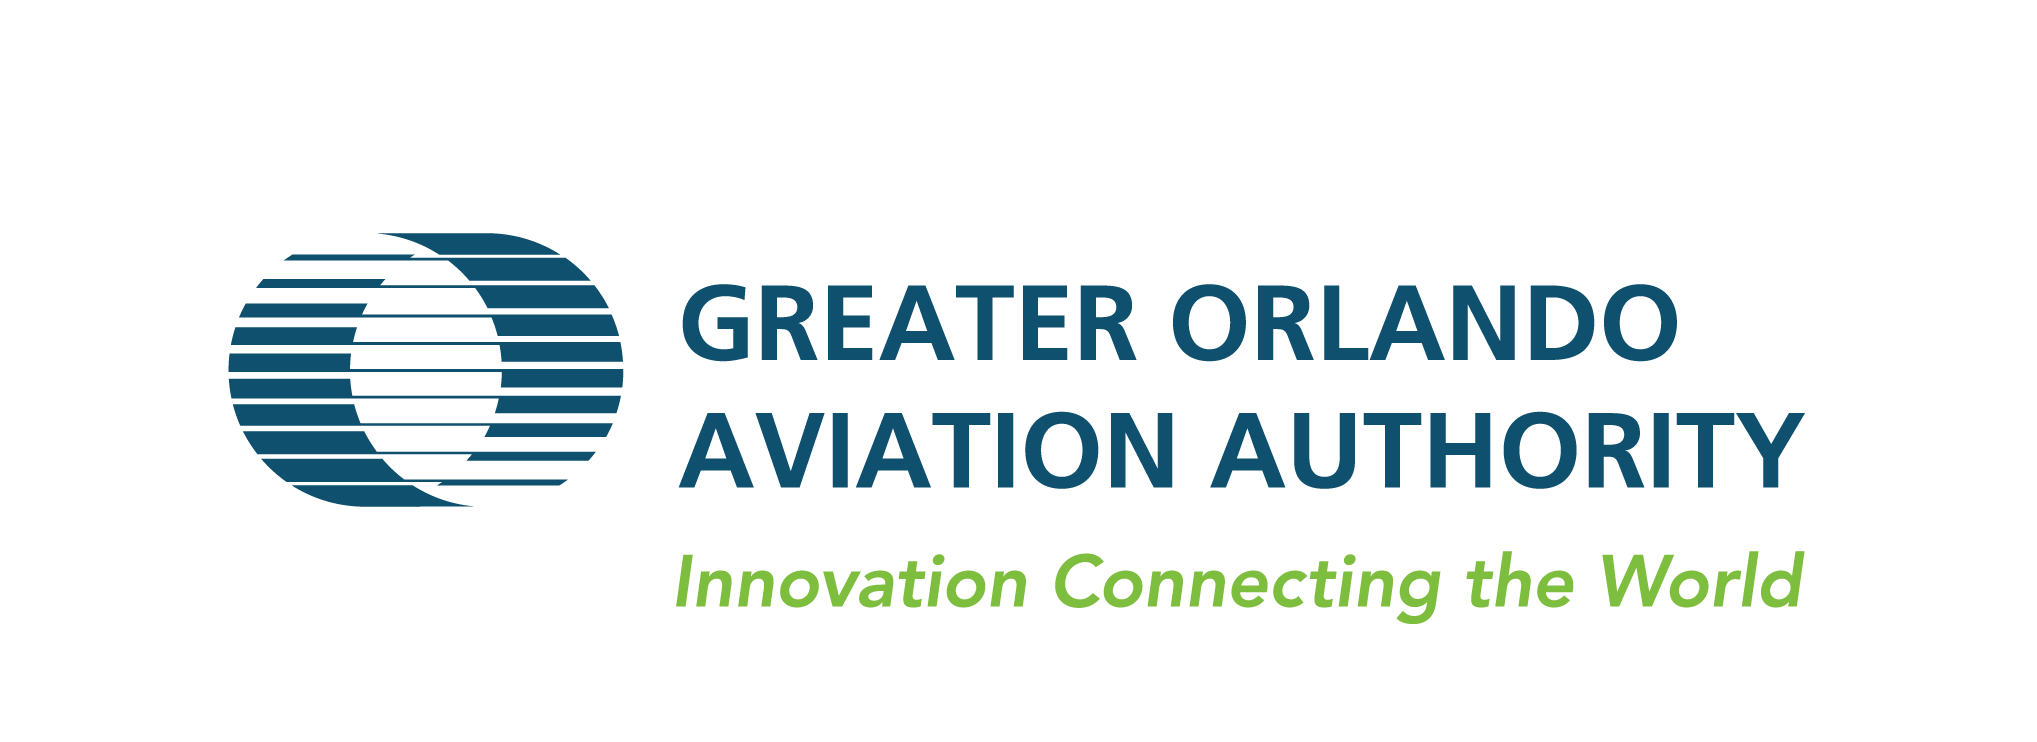 Greater Orlando Aviation Authority logo